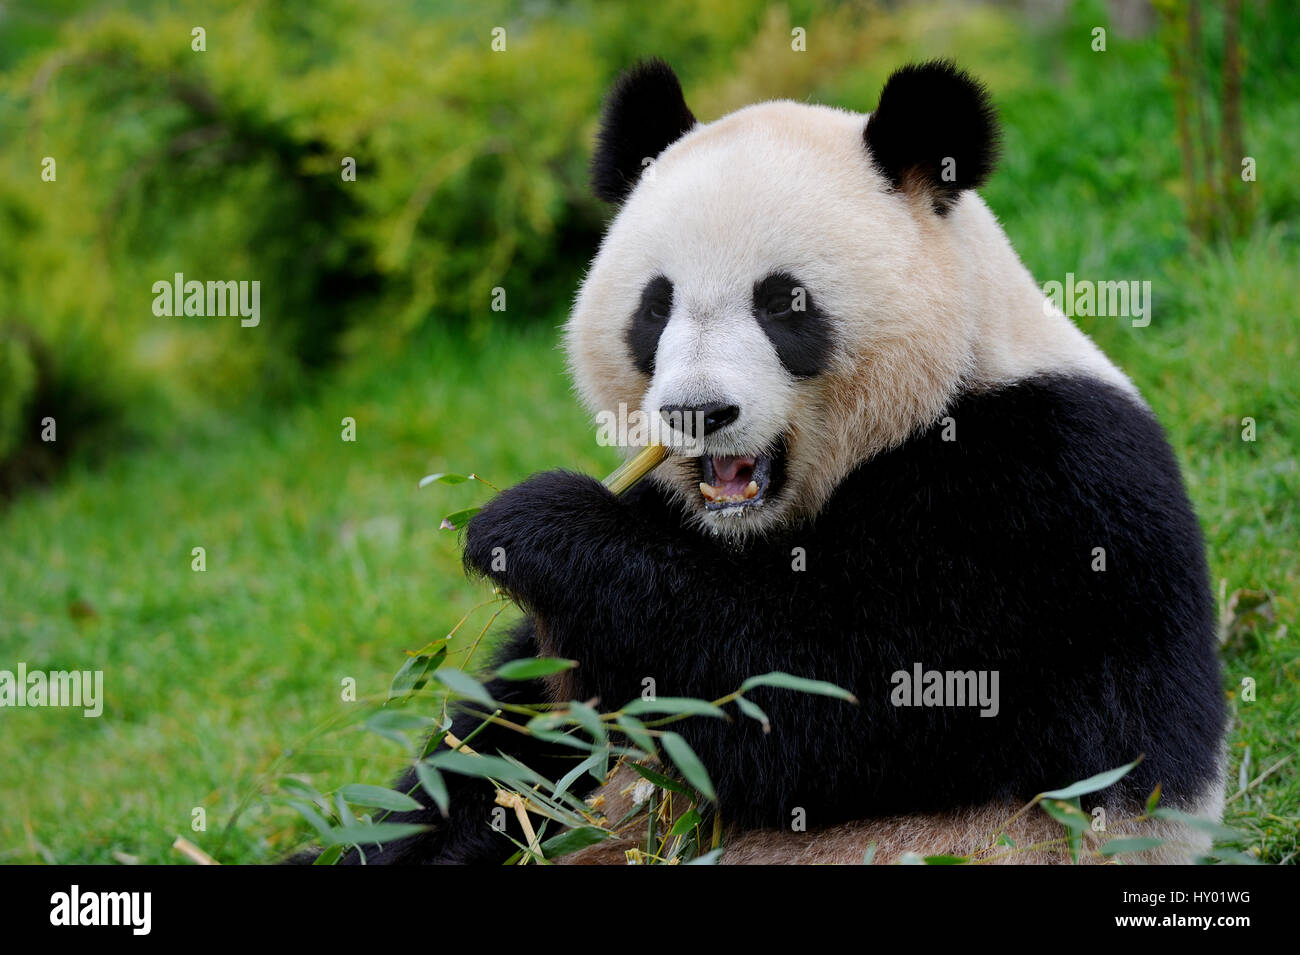 Panda gigante (Ailuropoda melanoleuca) mangiare bamboo.Beauval zoo, Francia. Foto Stock